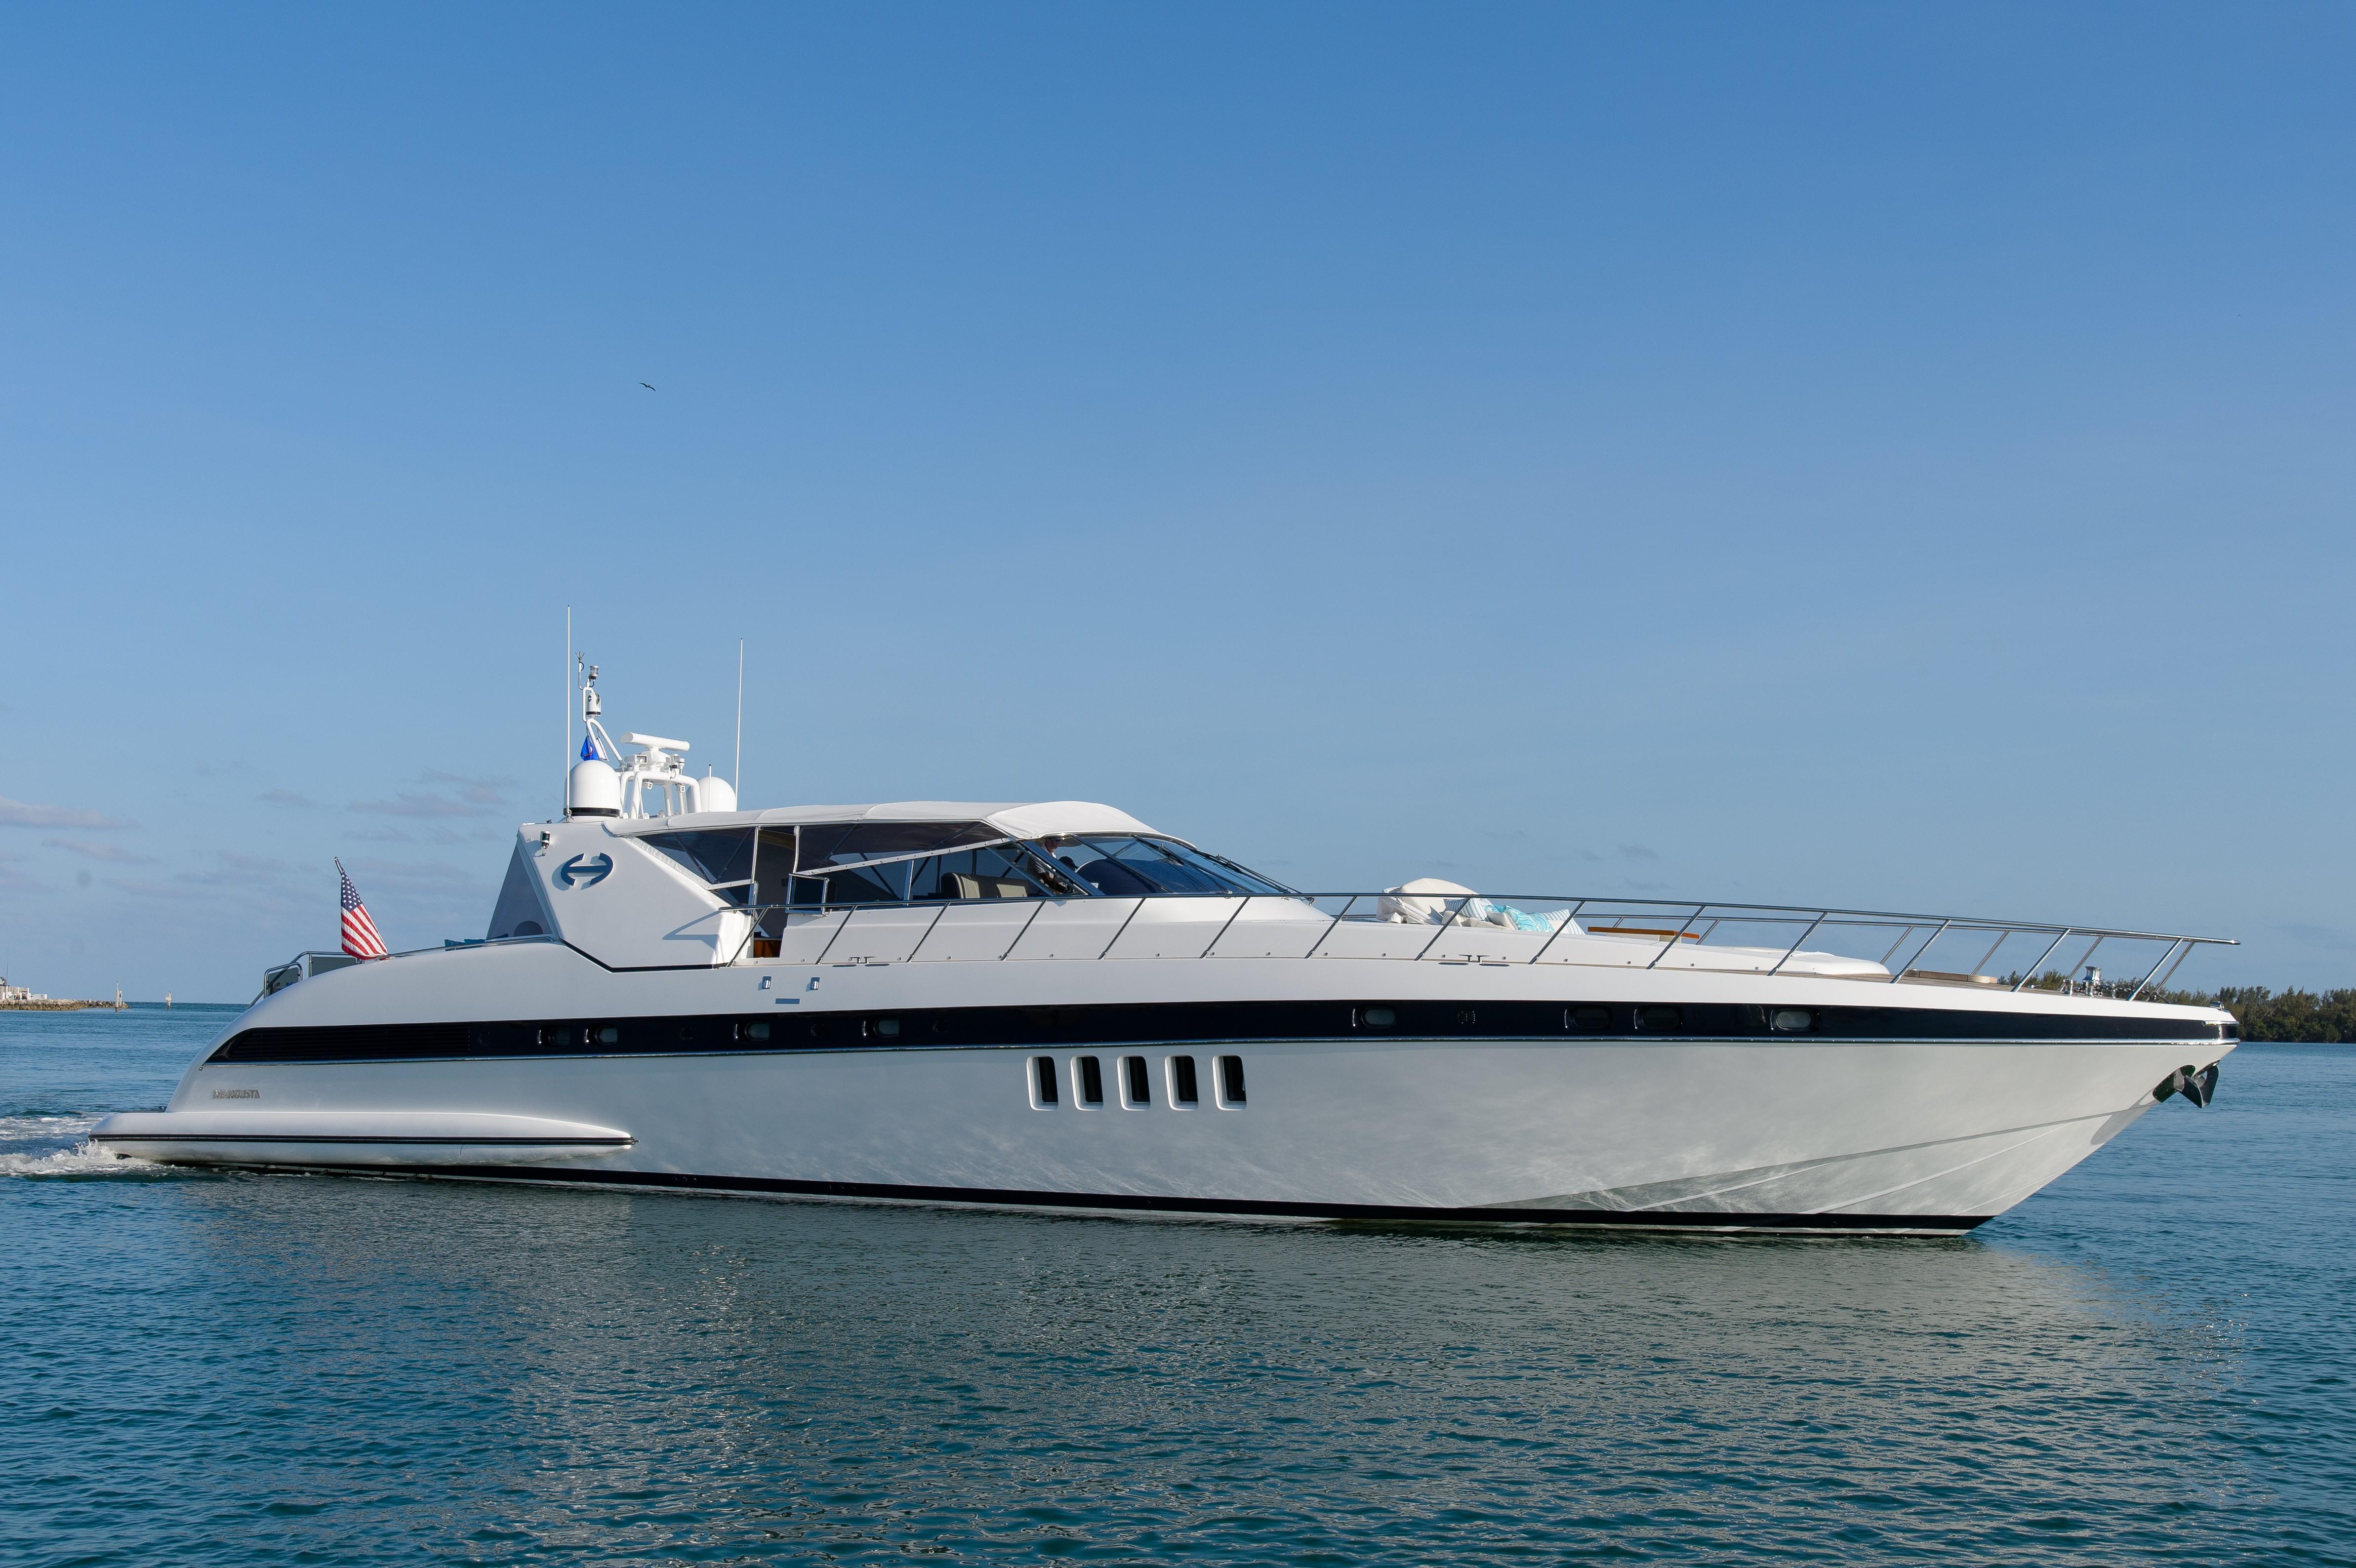 mangusta 80 yacht for sale